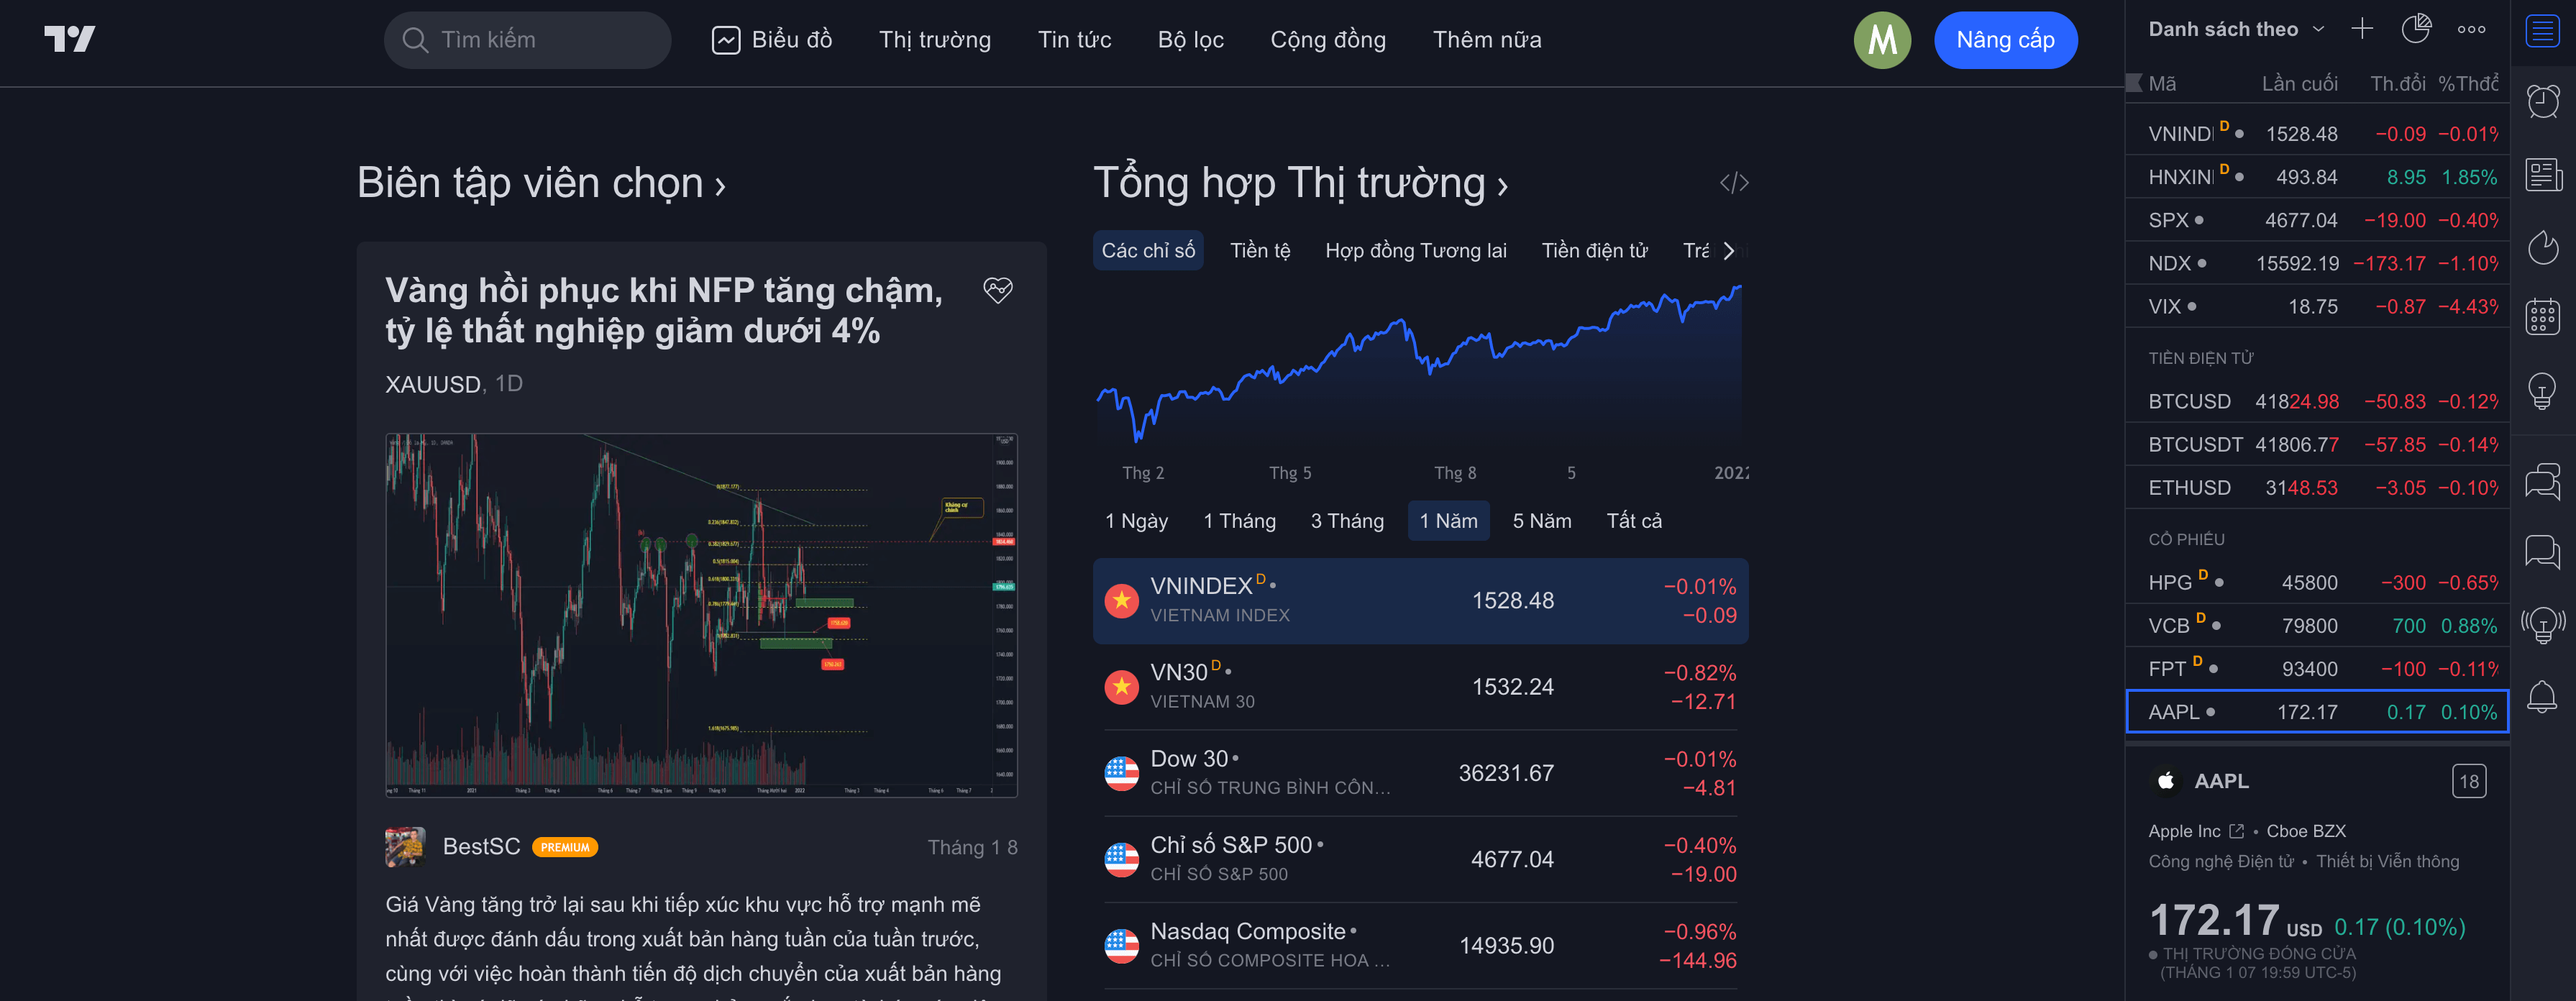 tradingview interface